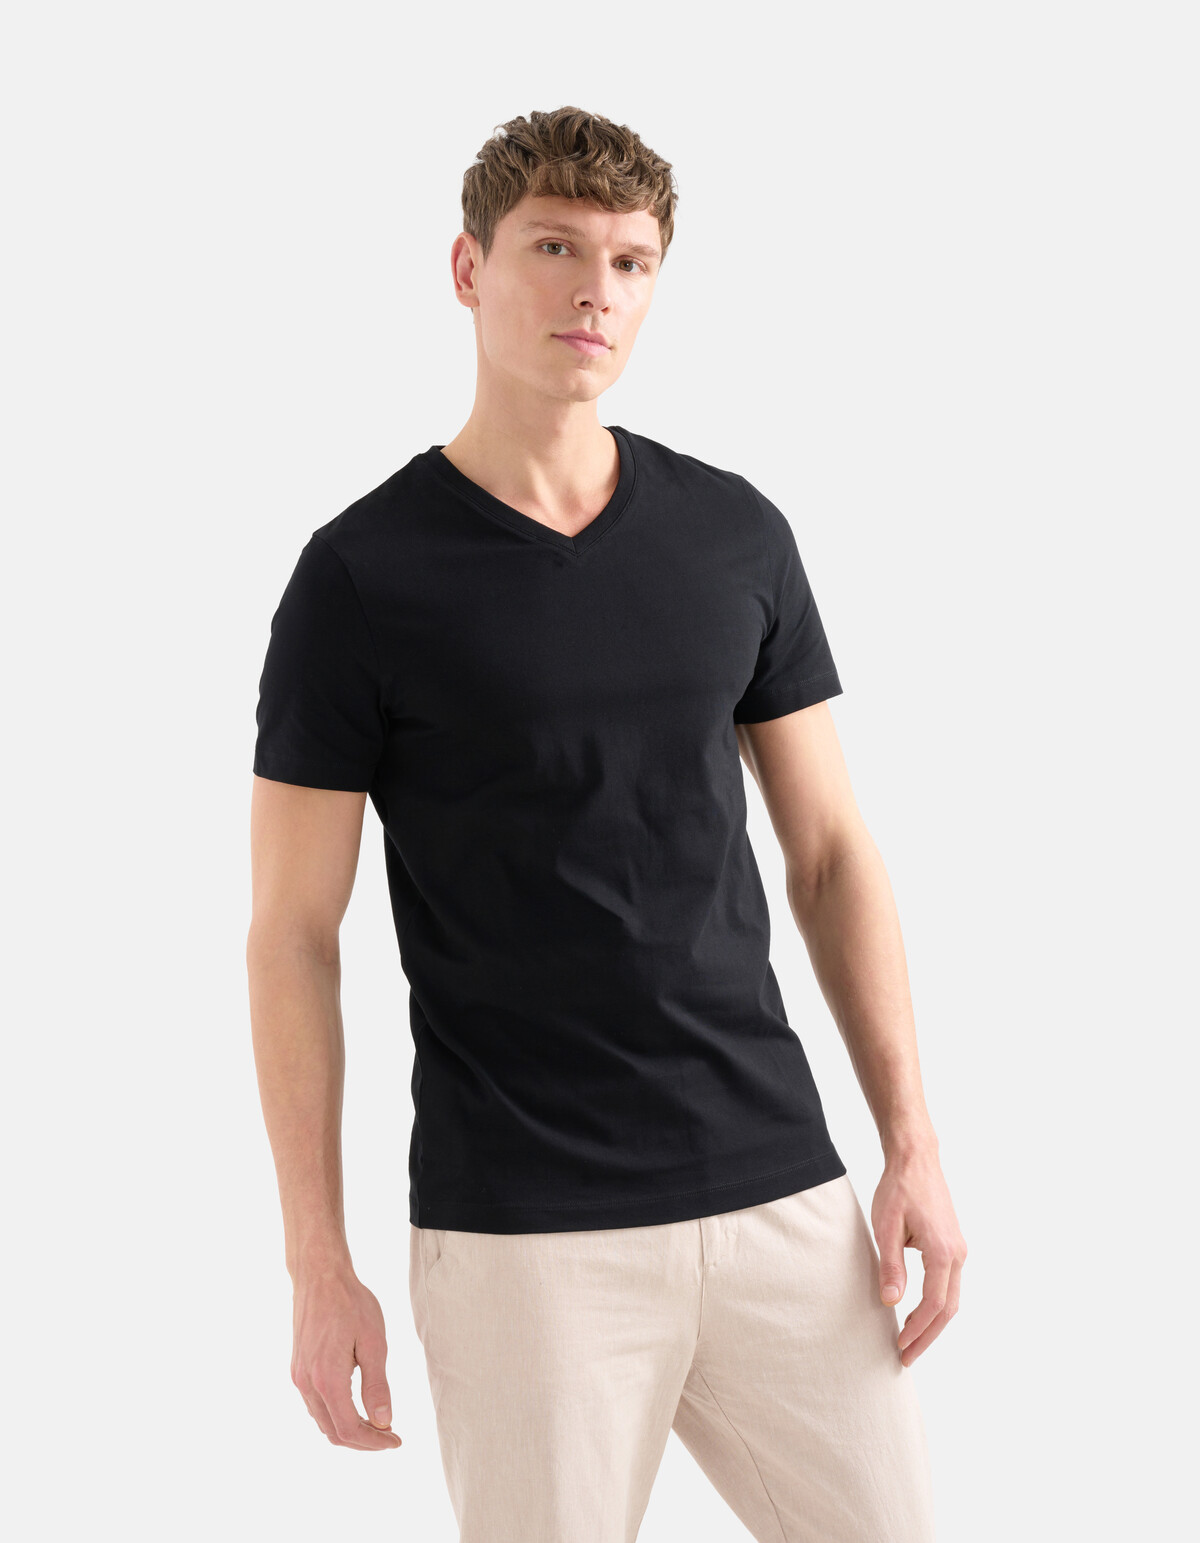 Evio T-shirt Refill